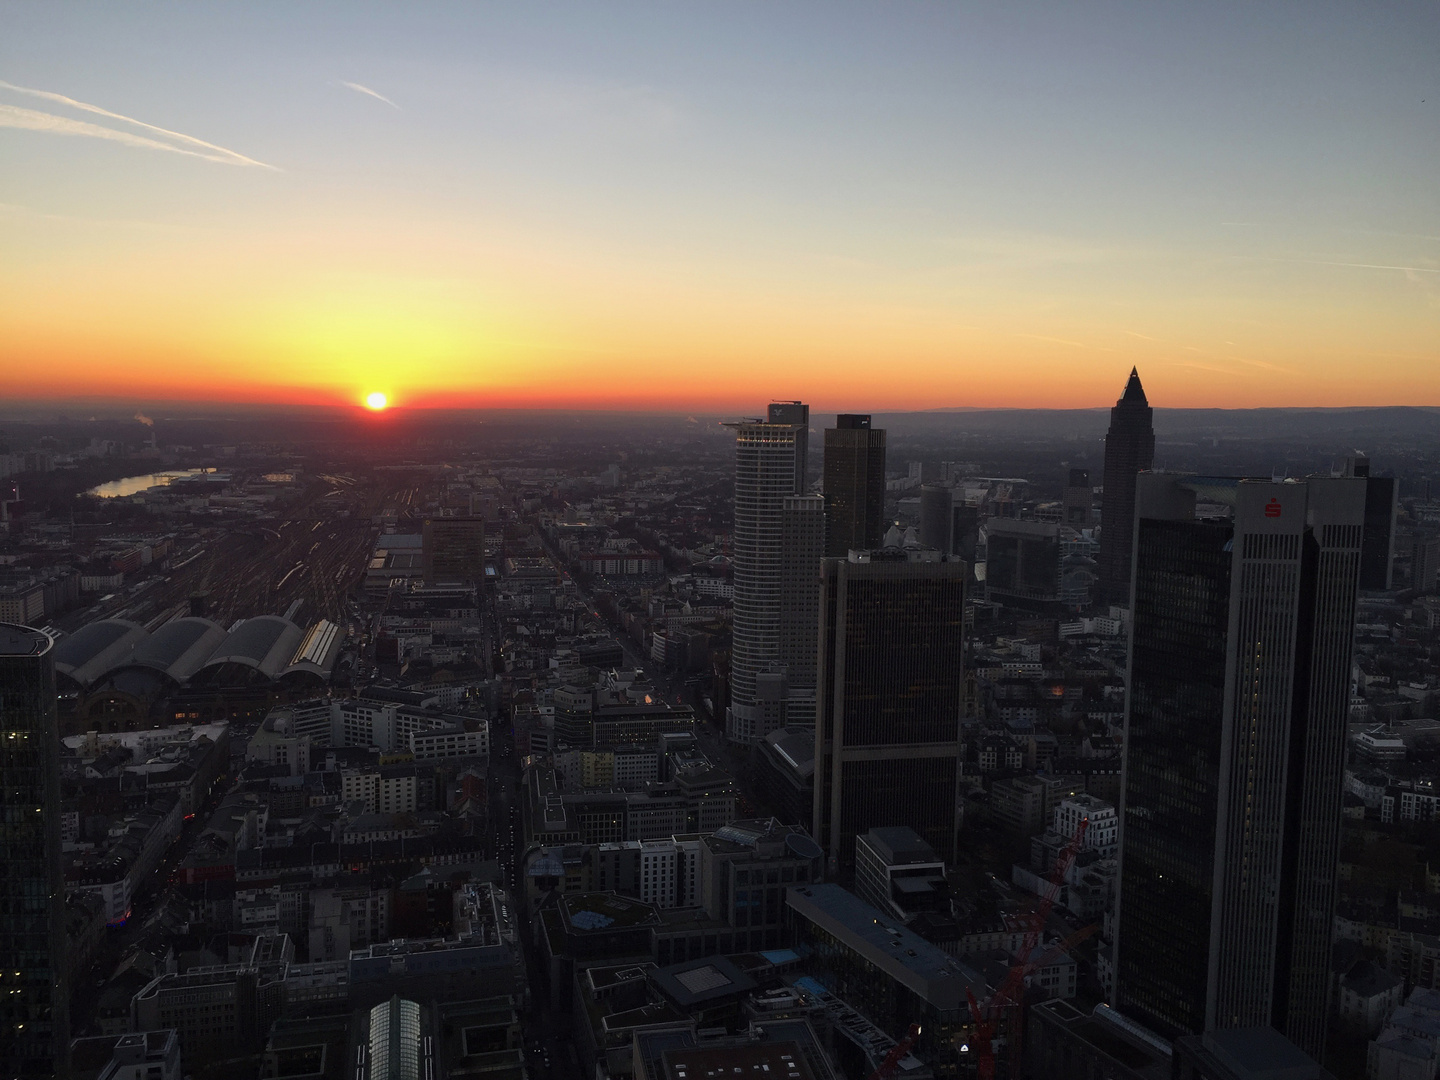 Sonnenuntergang über Frankfurt am Main im Spätherbst